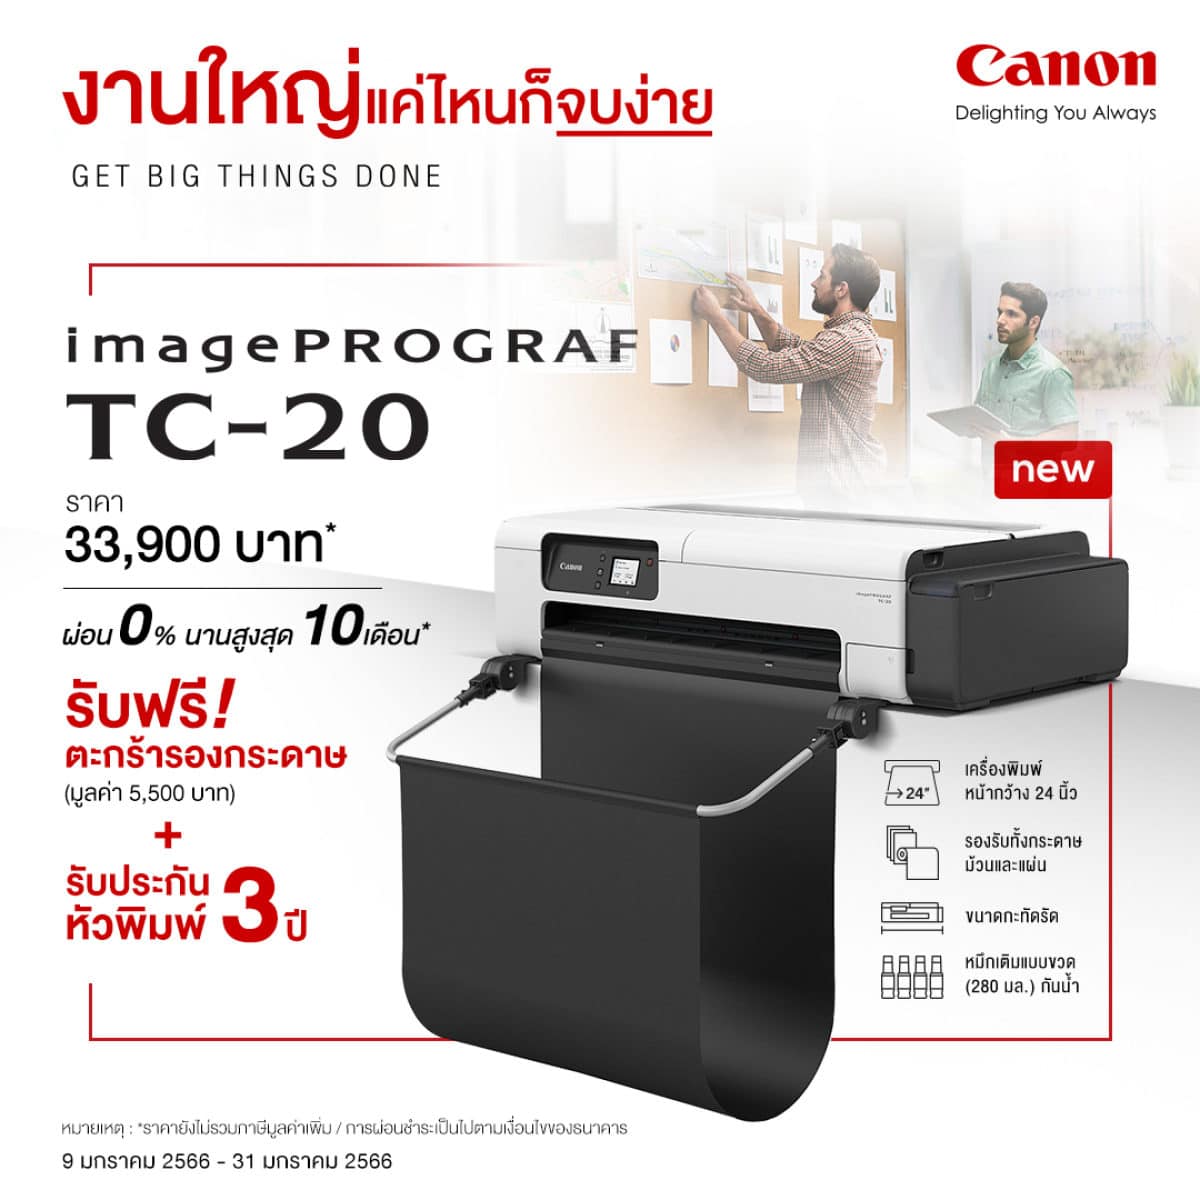 Canon-imagePROGRAF-TC-20